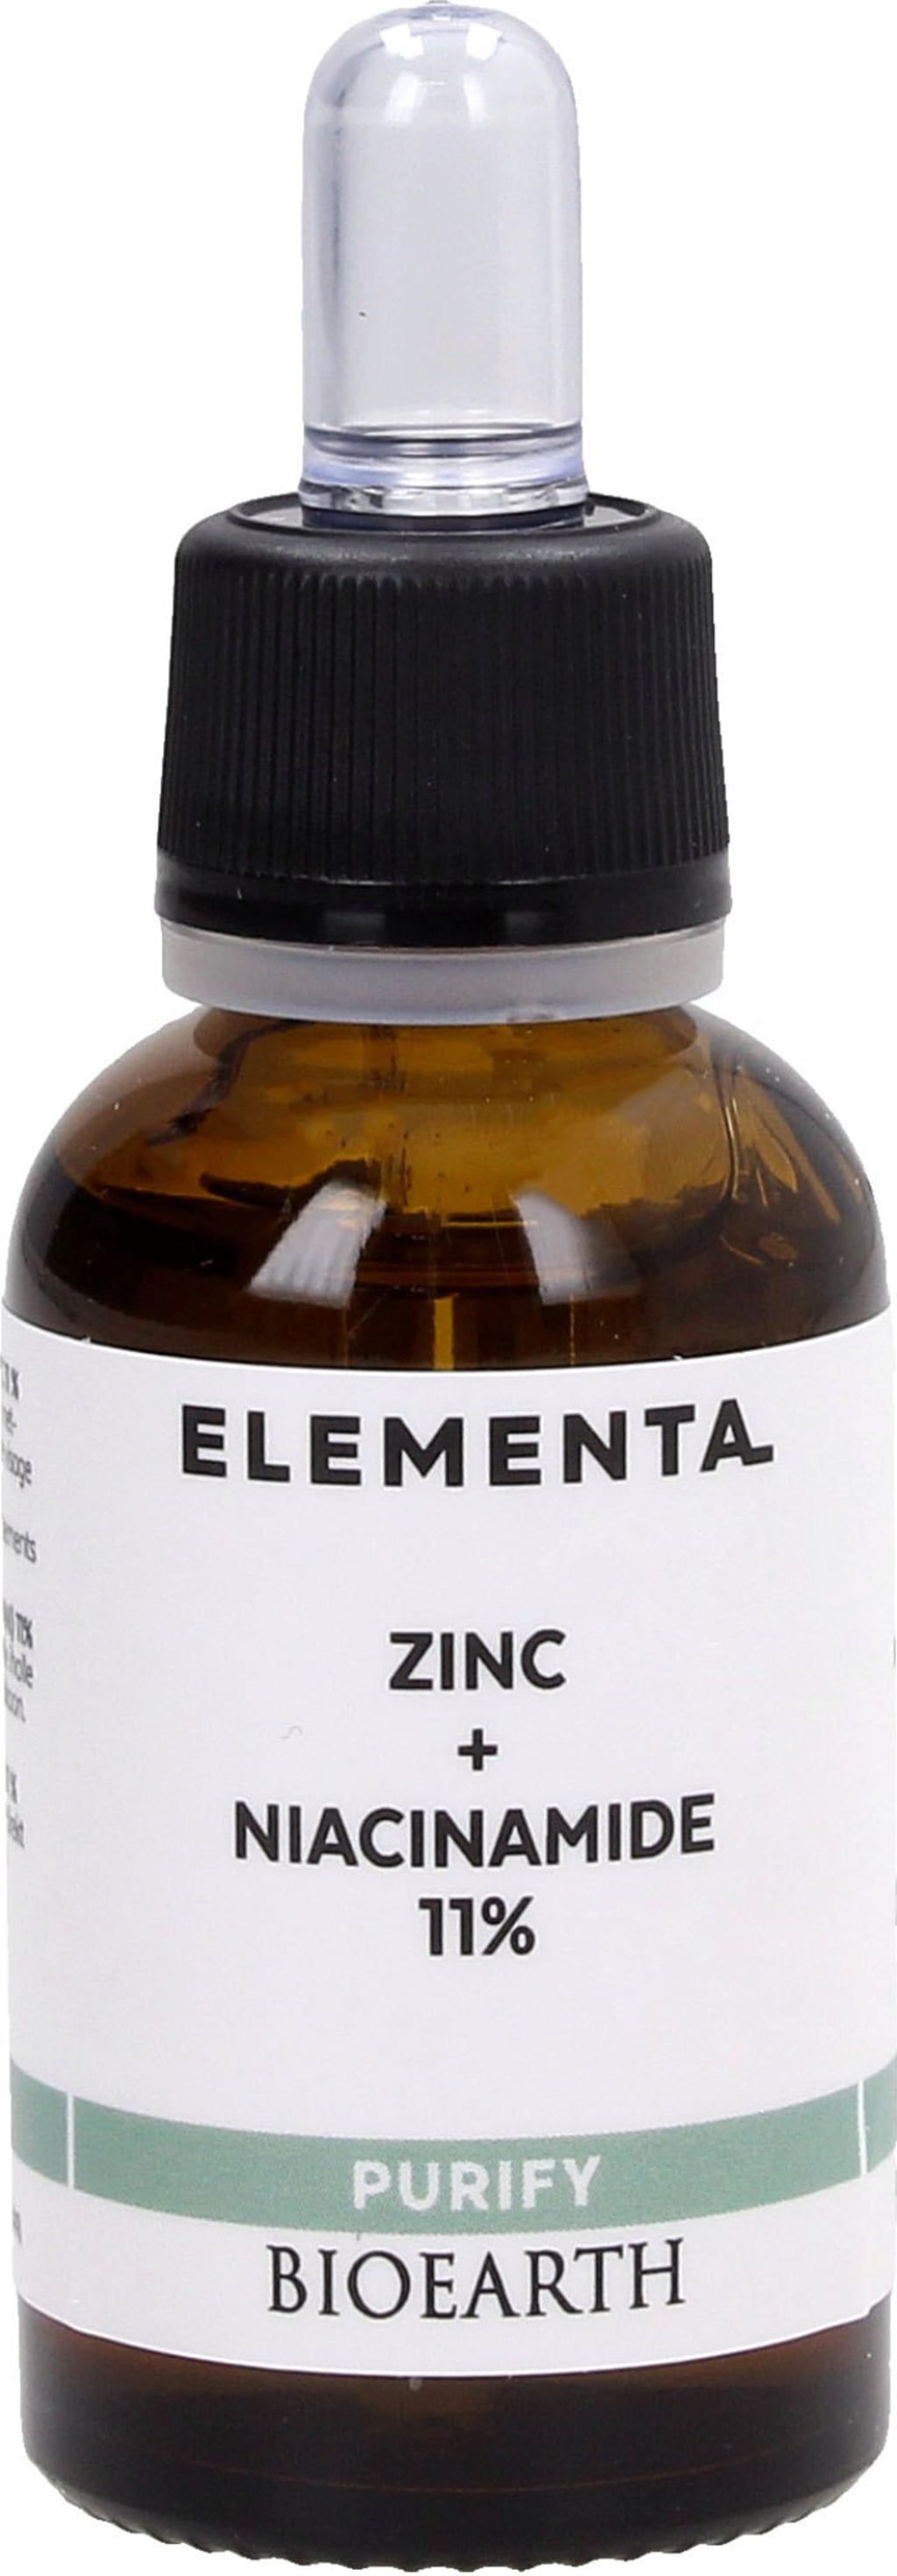 BIOEARTH Zinok + niacínamid 11% ELEMENTA PURIFY - 30 ml